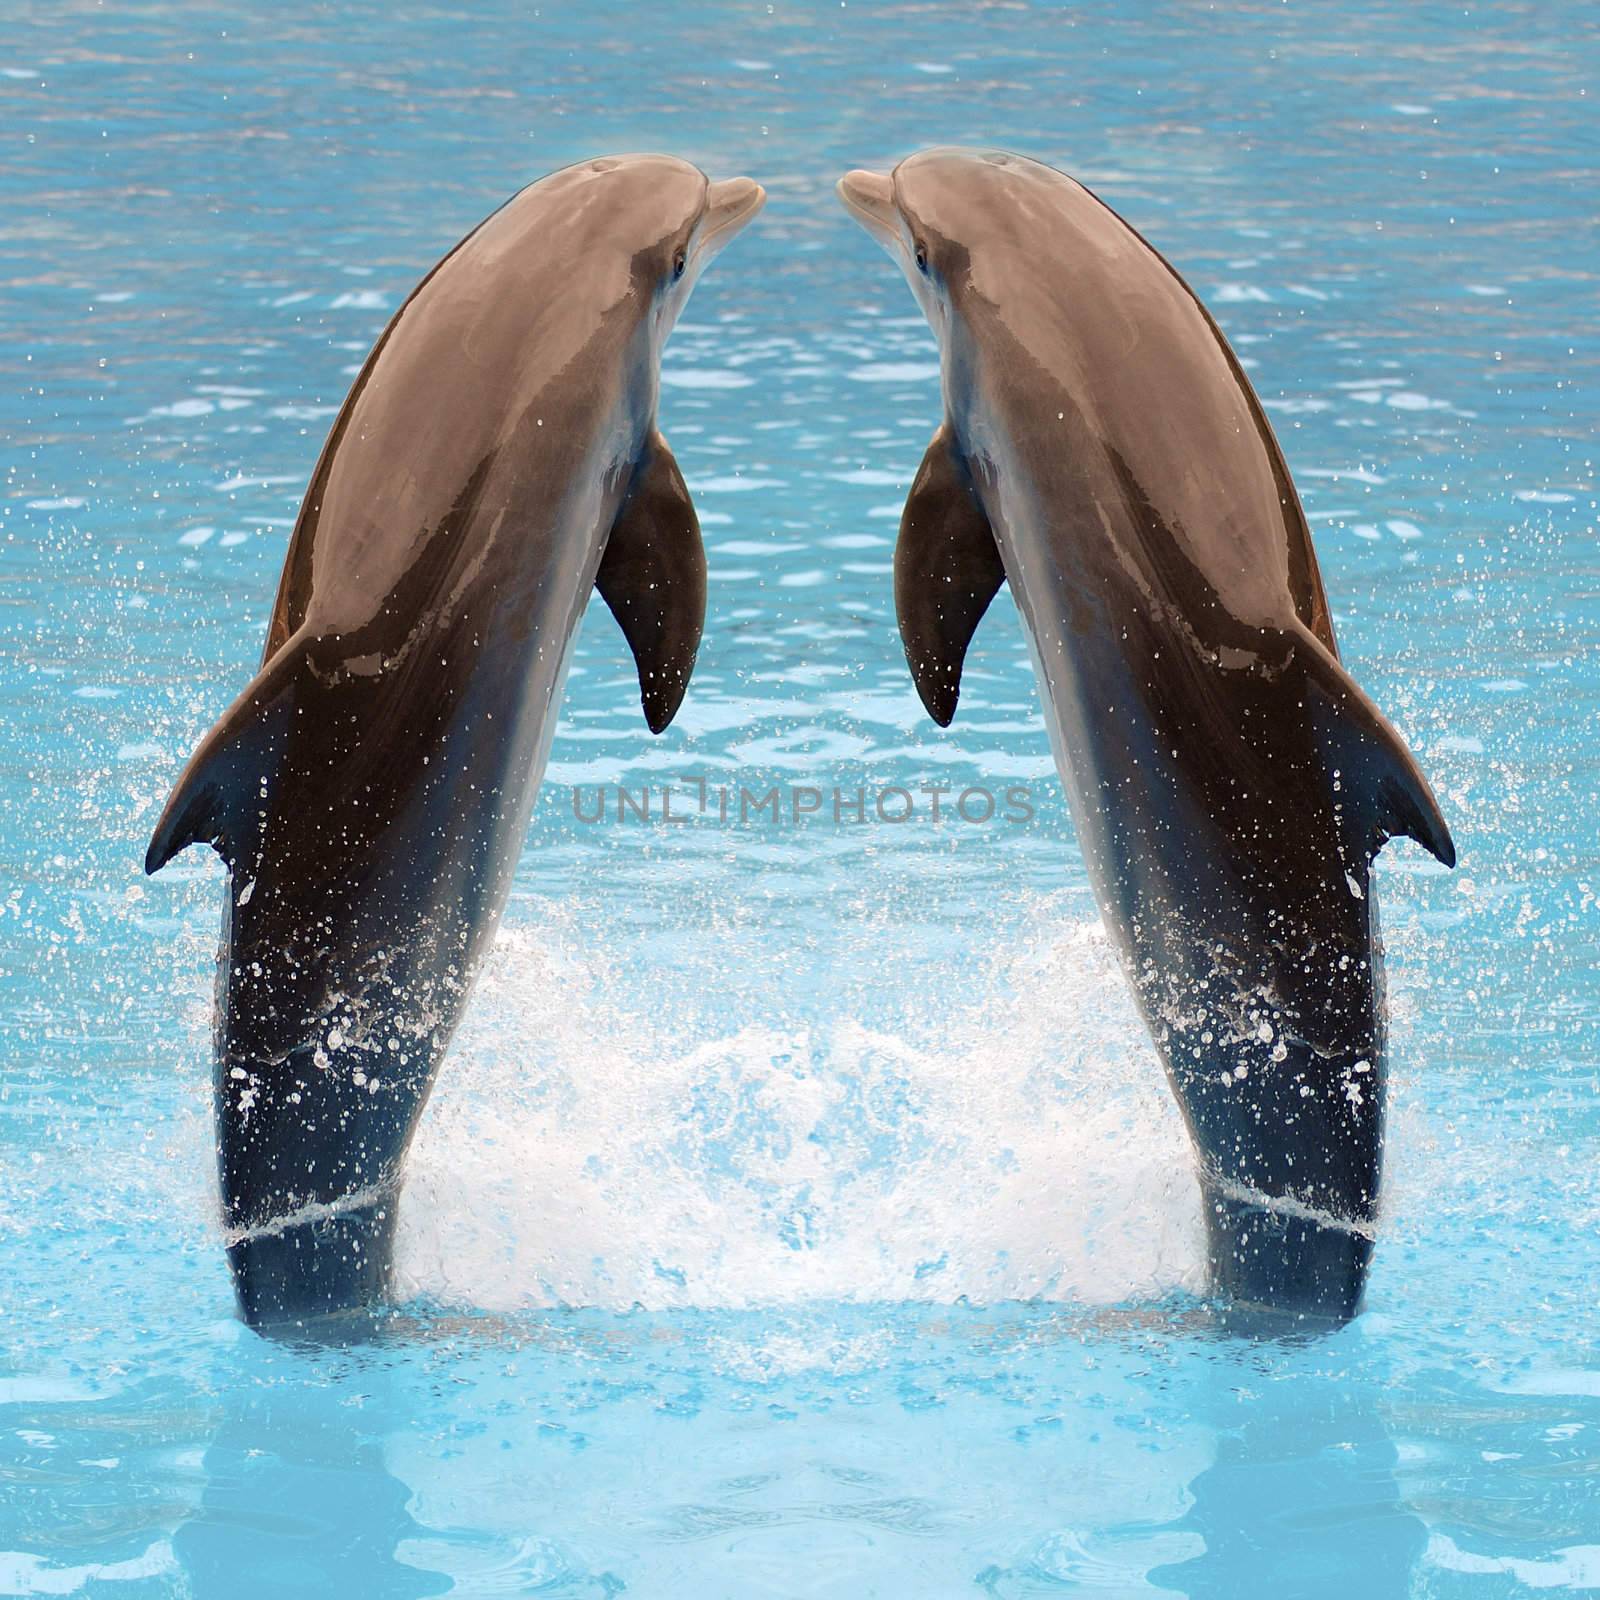 Dolphin twins by cfoto